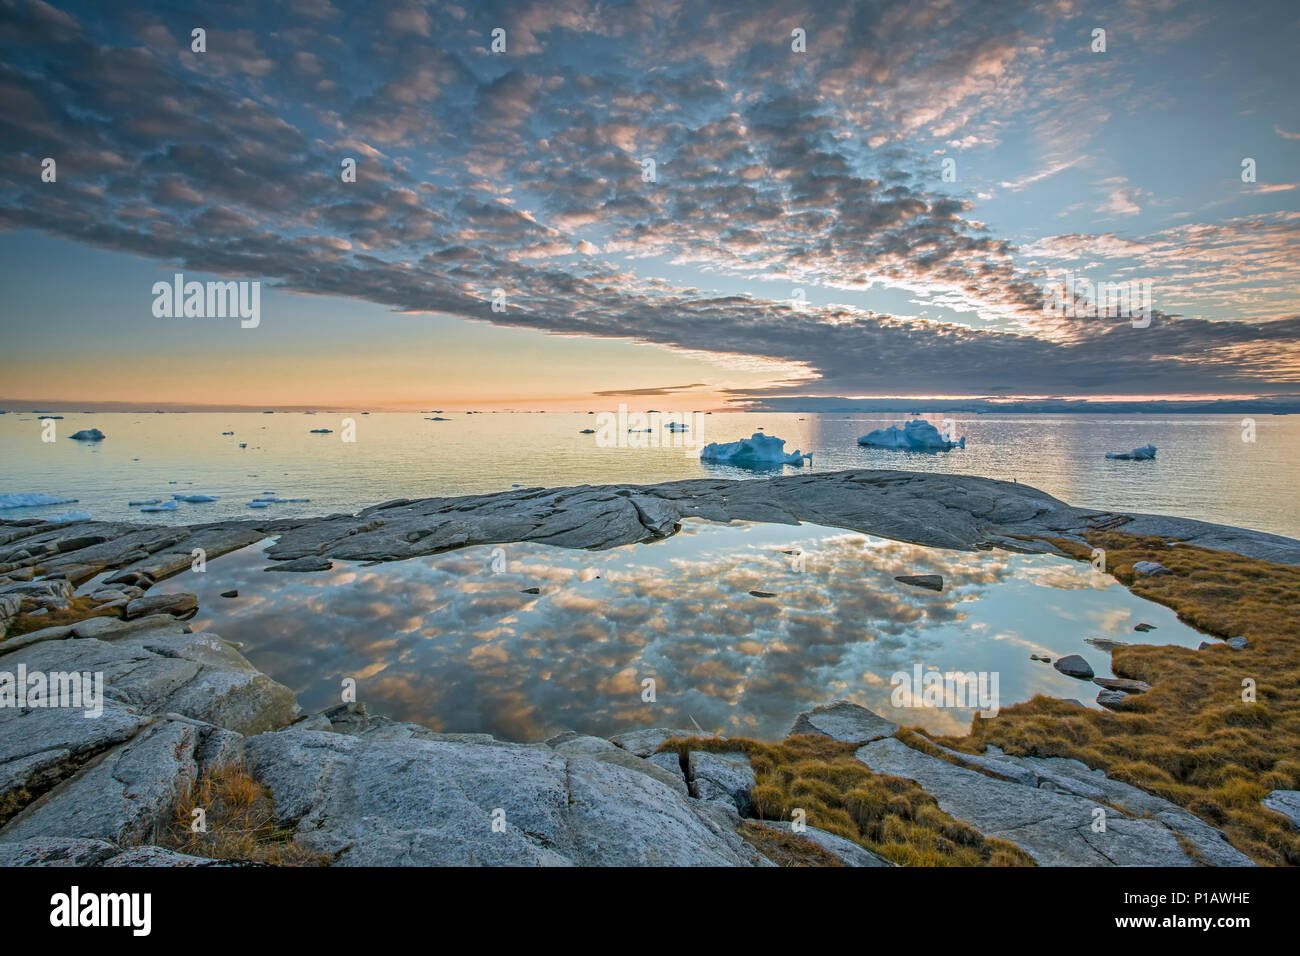 Idyllic clouds over remote ocean with icebergs, Kalaallisut, Greenland Stock Photo